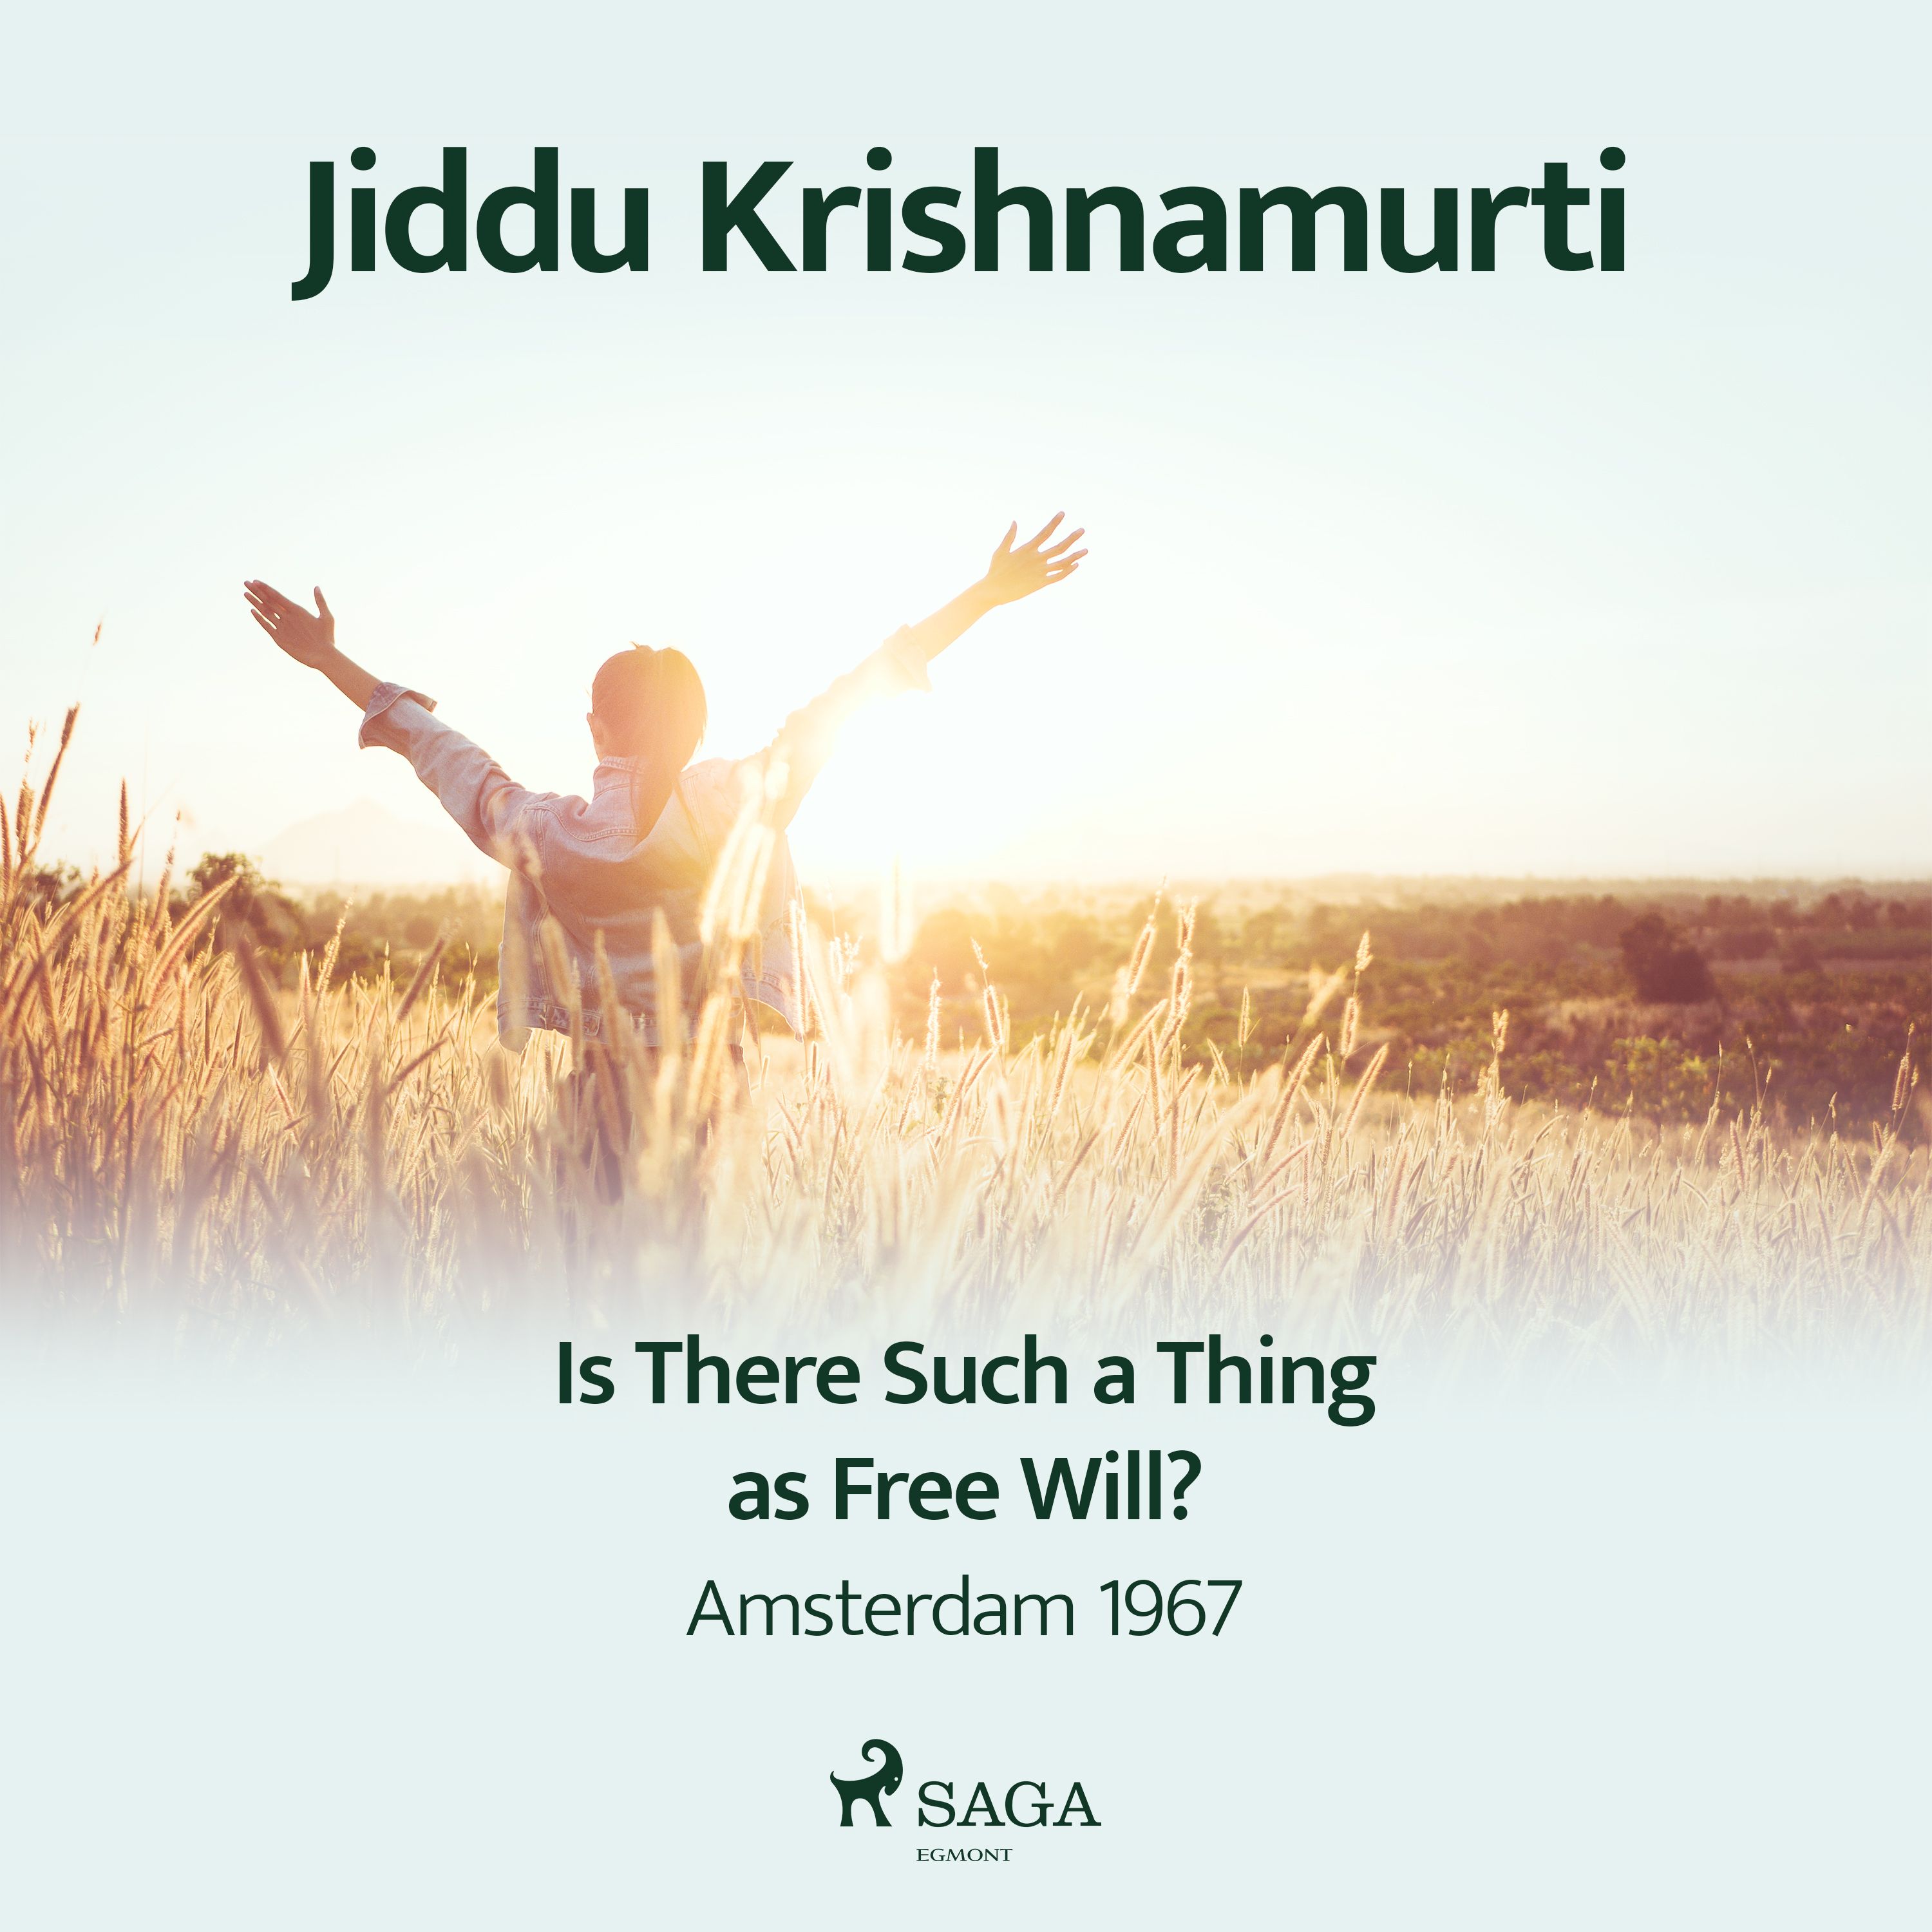 Is There Such a Thing as Free Will? – Amsterdam 1967, ljudbok av Jiddu Krishnamurti